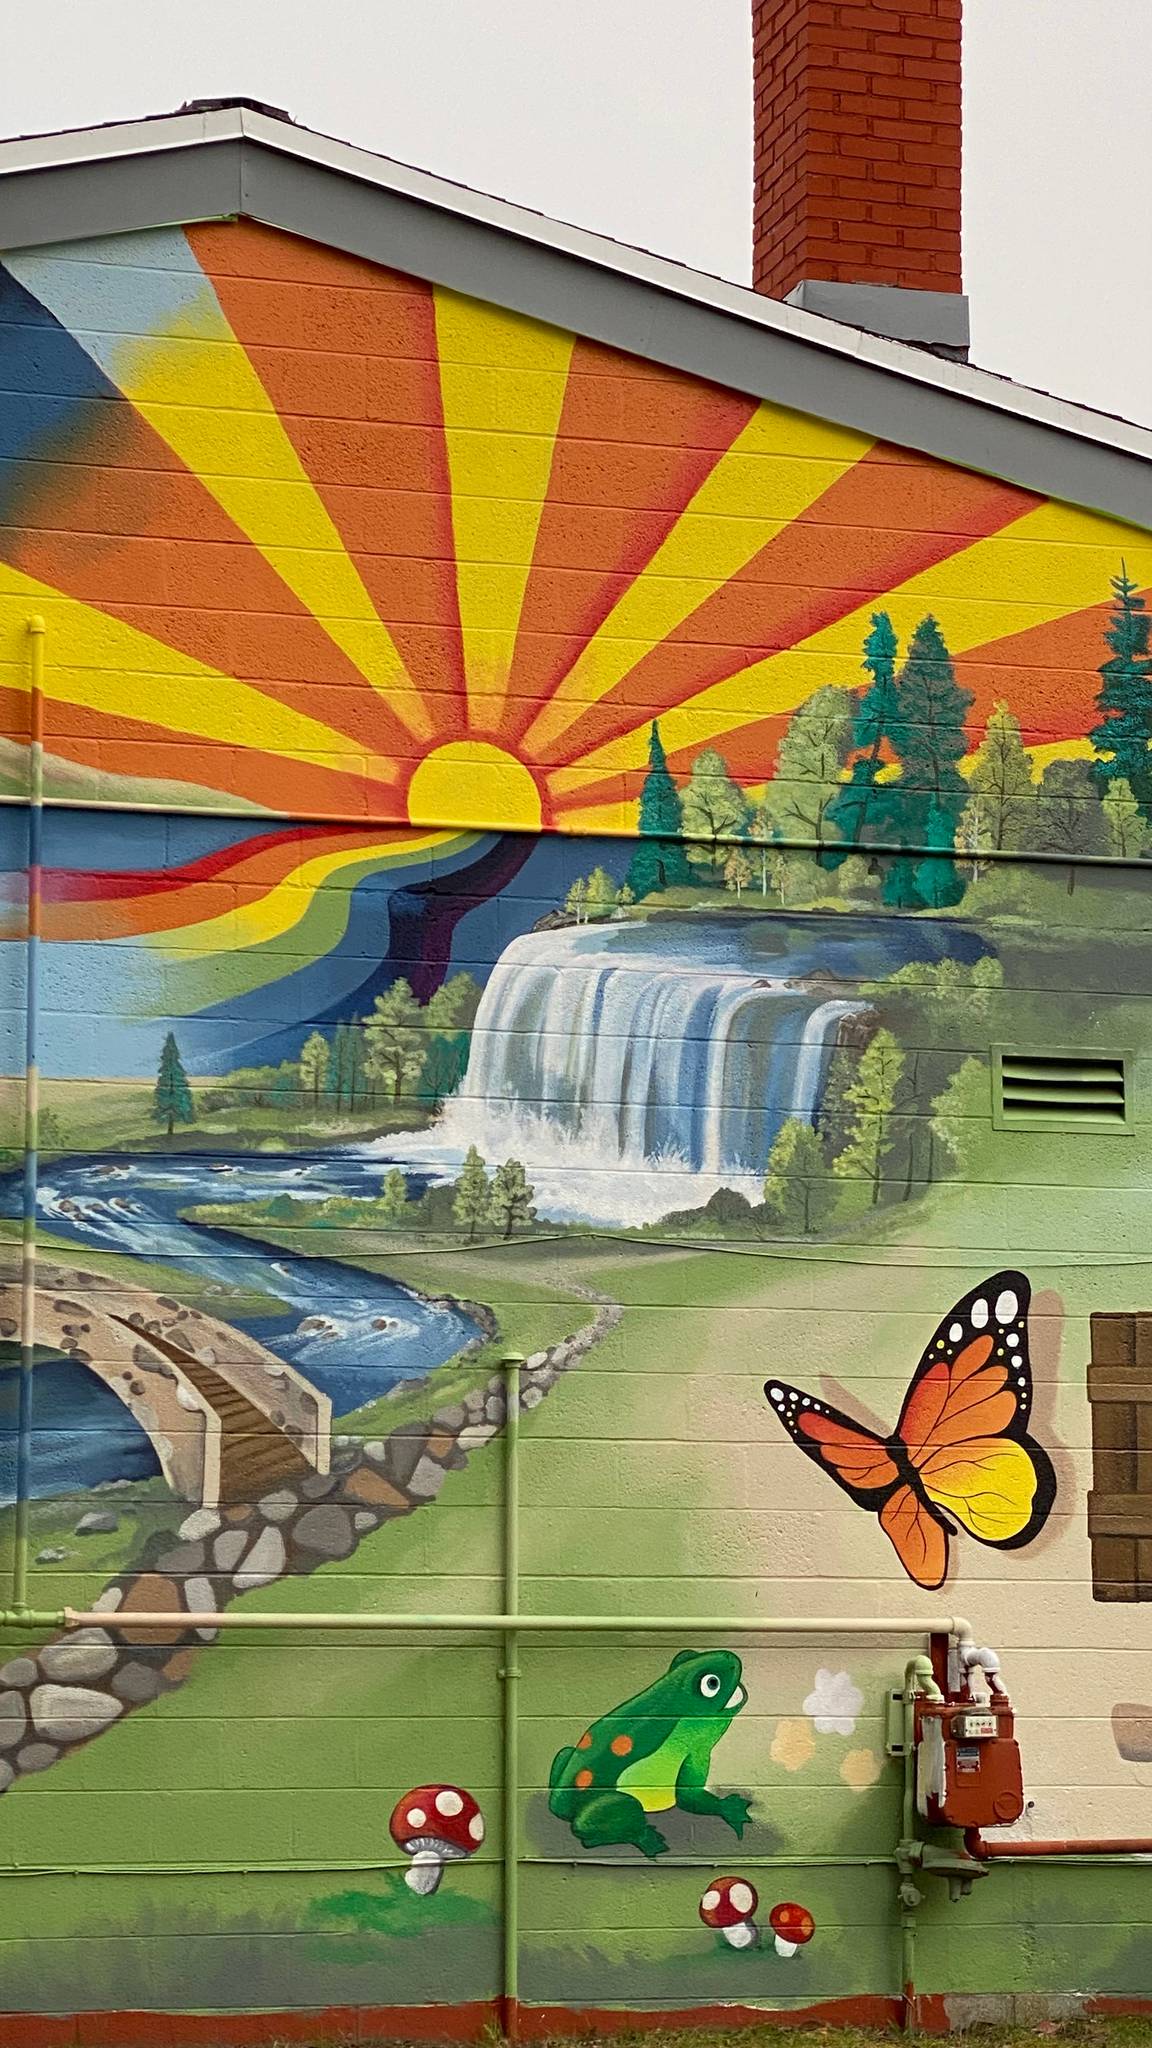 KnUpp North Art&mdash;Sunshine, butterflies and rainbows.